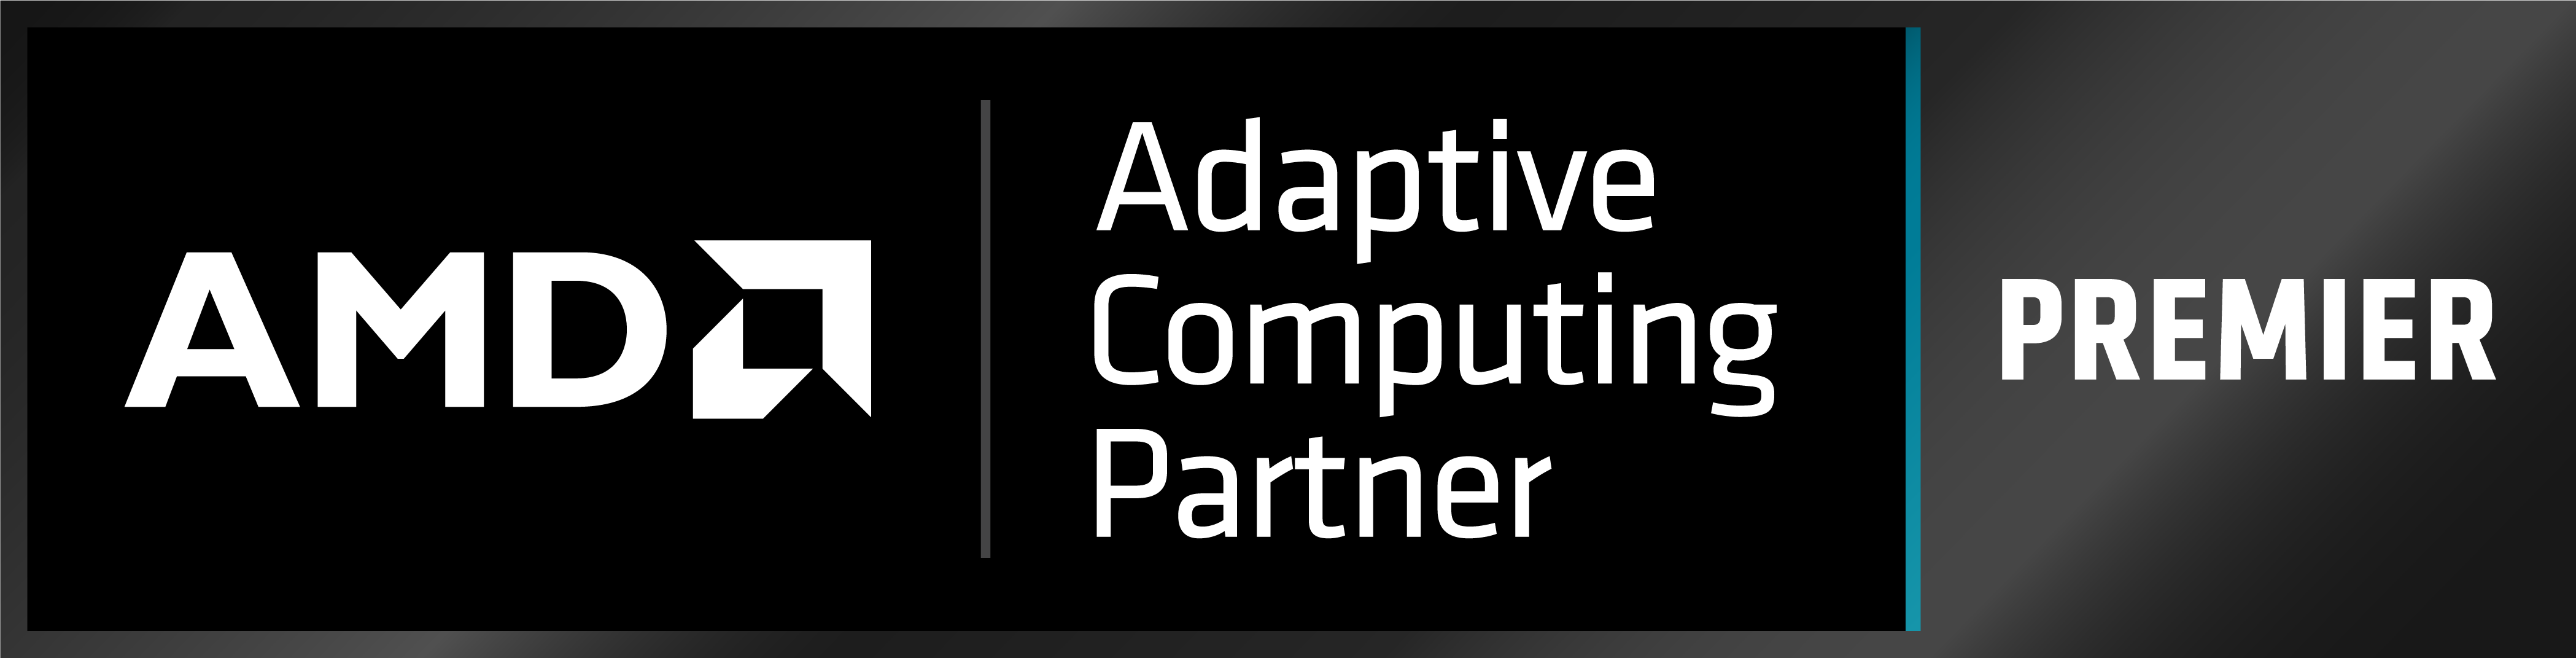 AMD Adaptive Computing Partner